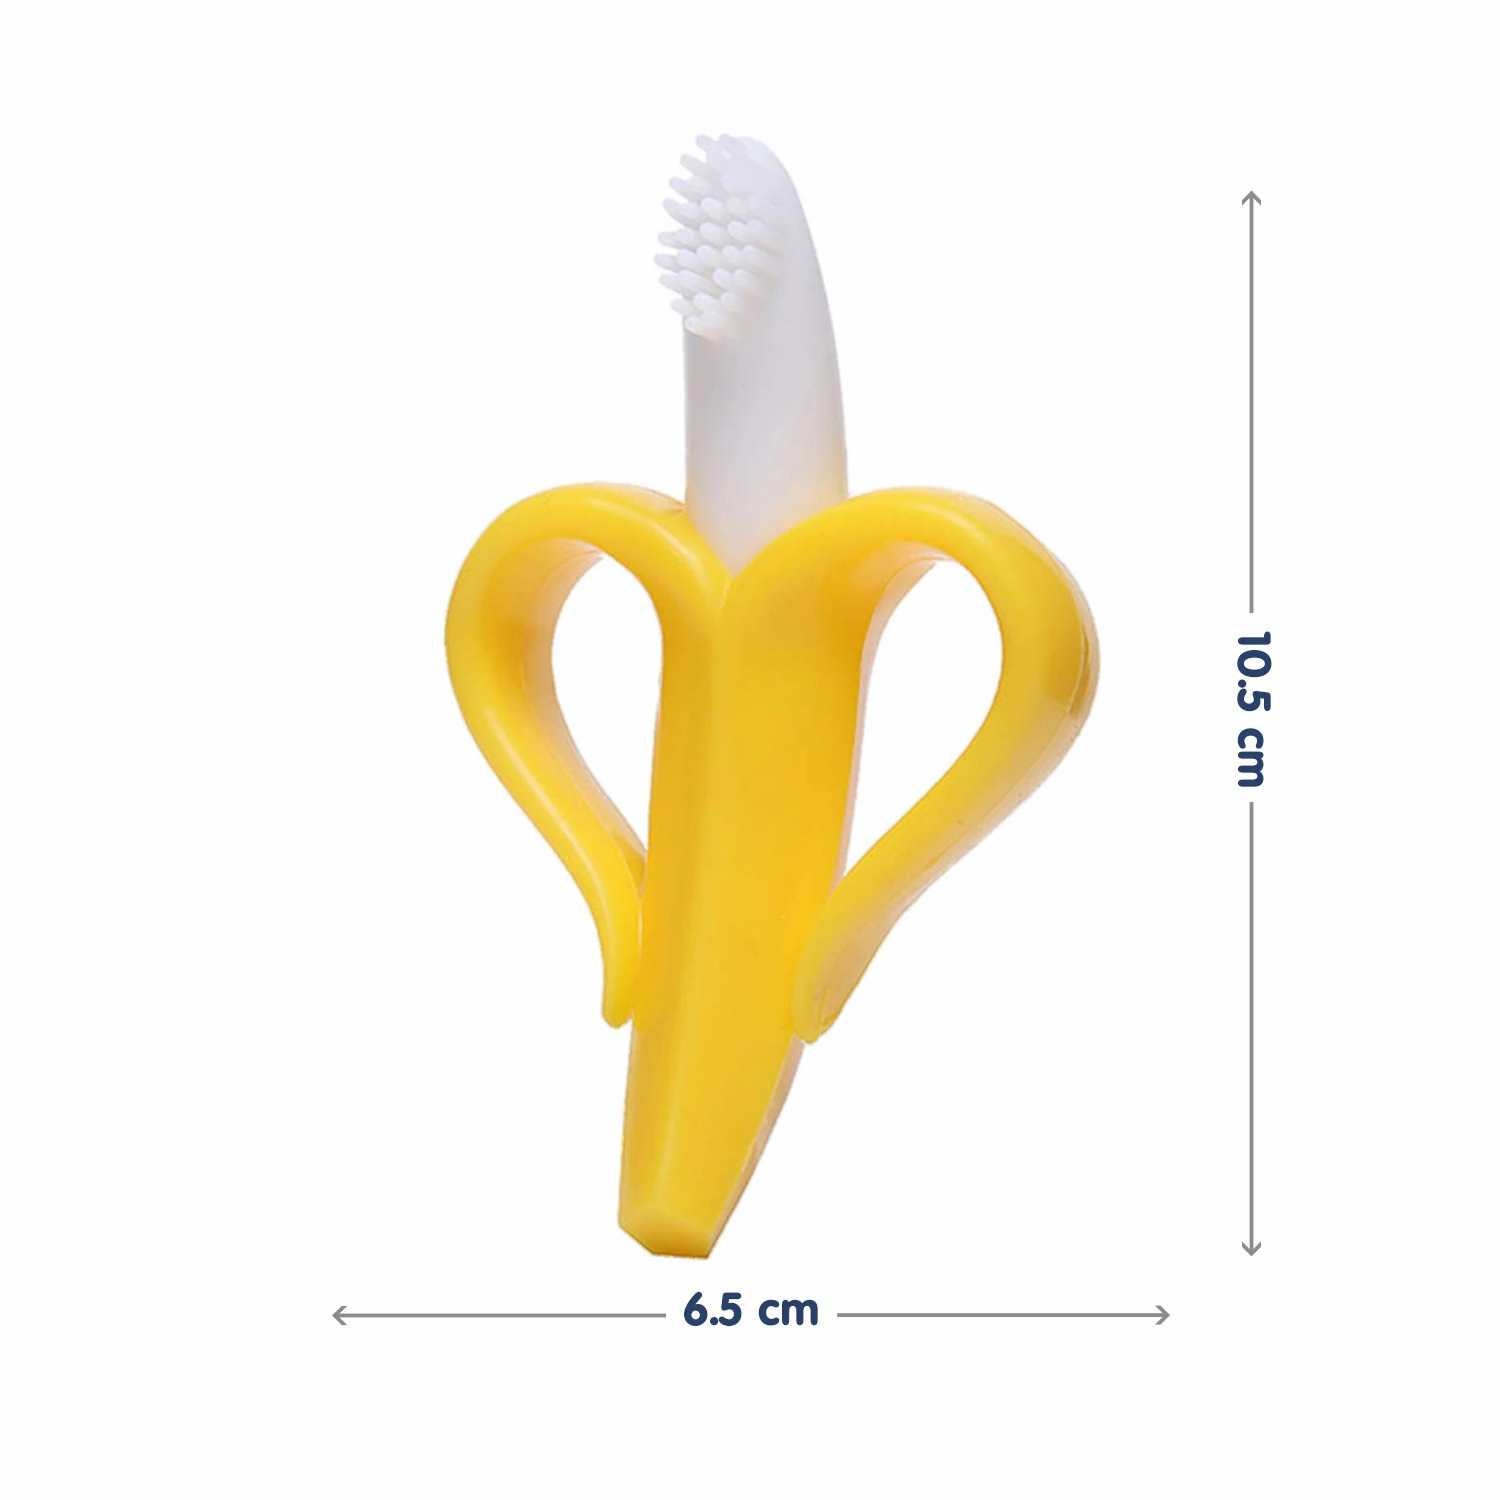 HOPOP Soft Silicone Banana Teether For Babies - Yellow 4m+